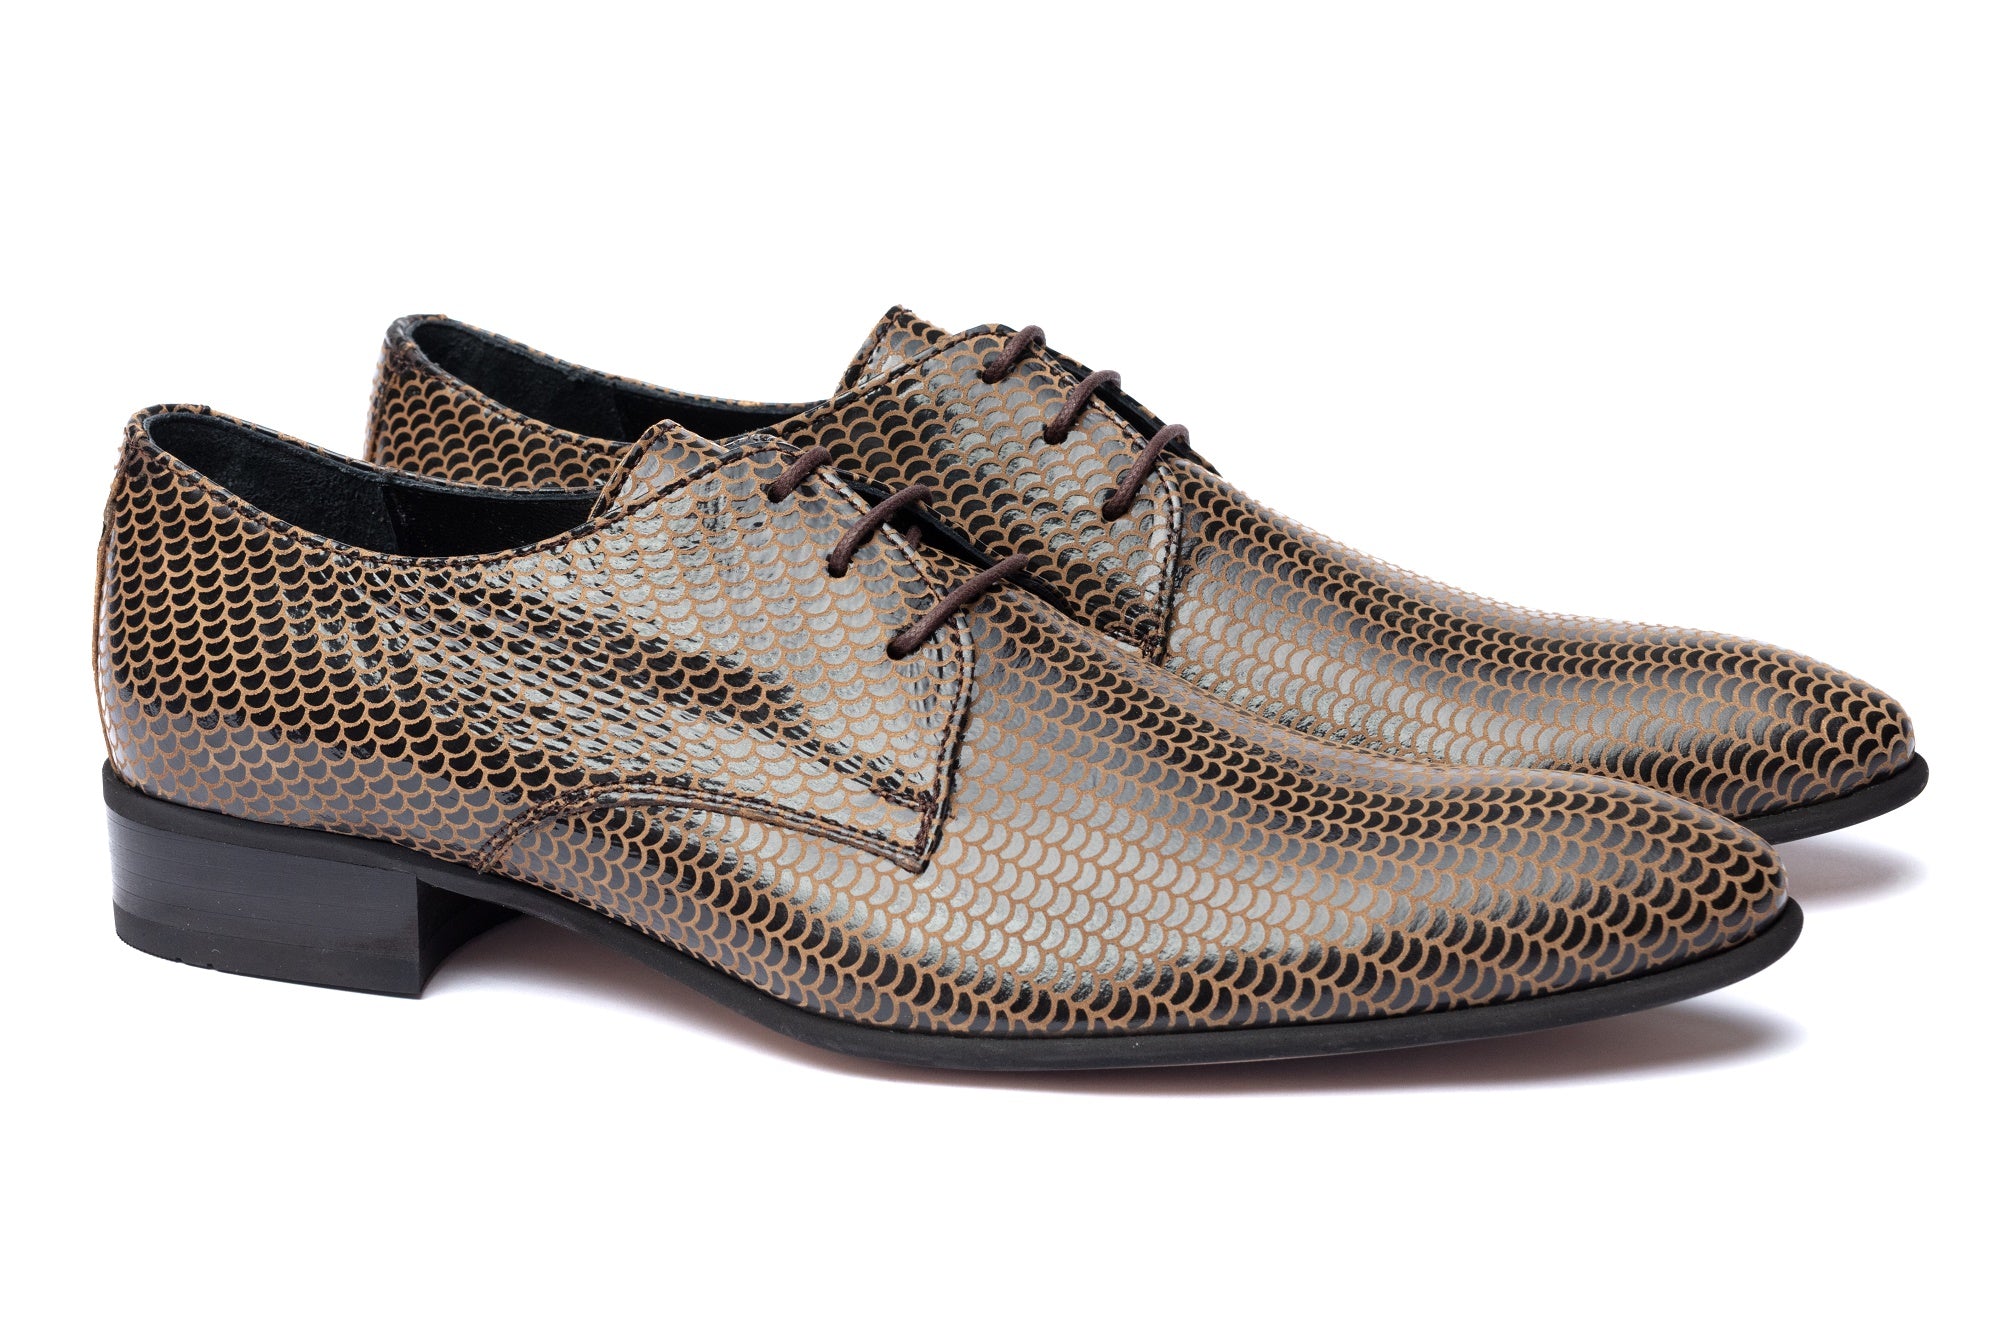 The Leonard Shoes - Shoes by Urbbana